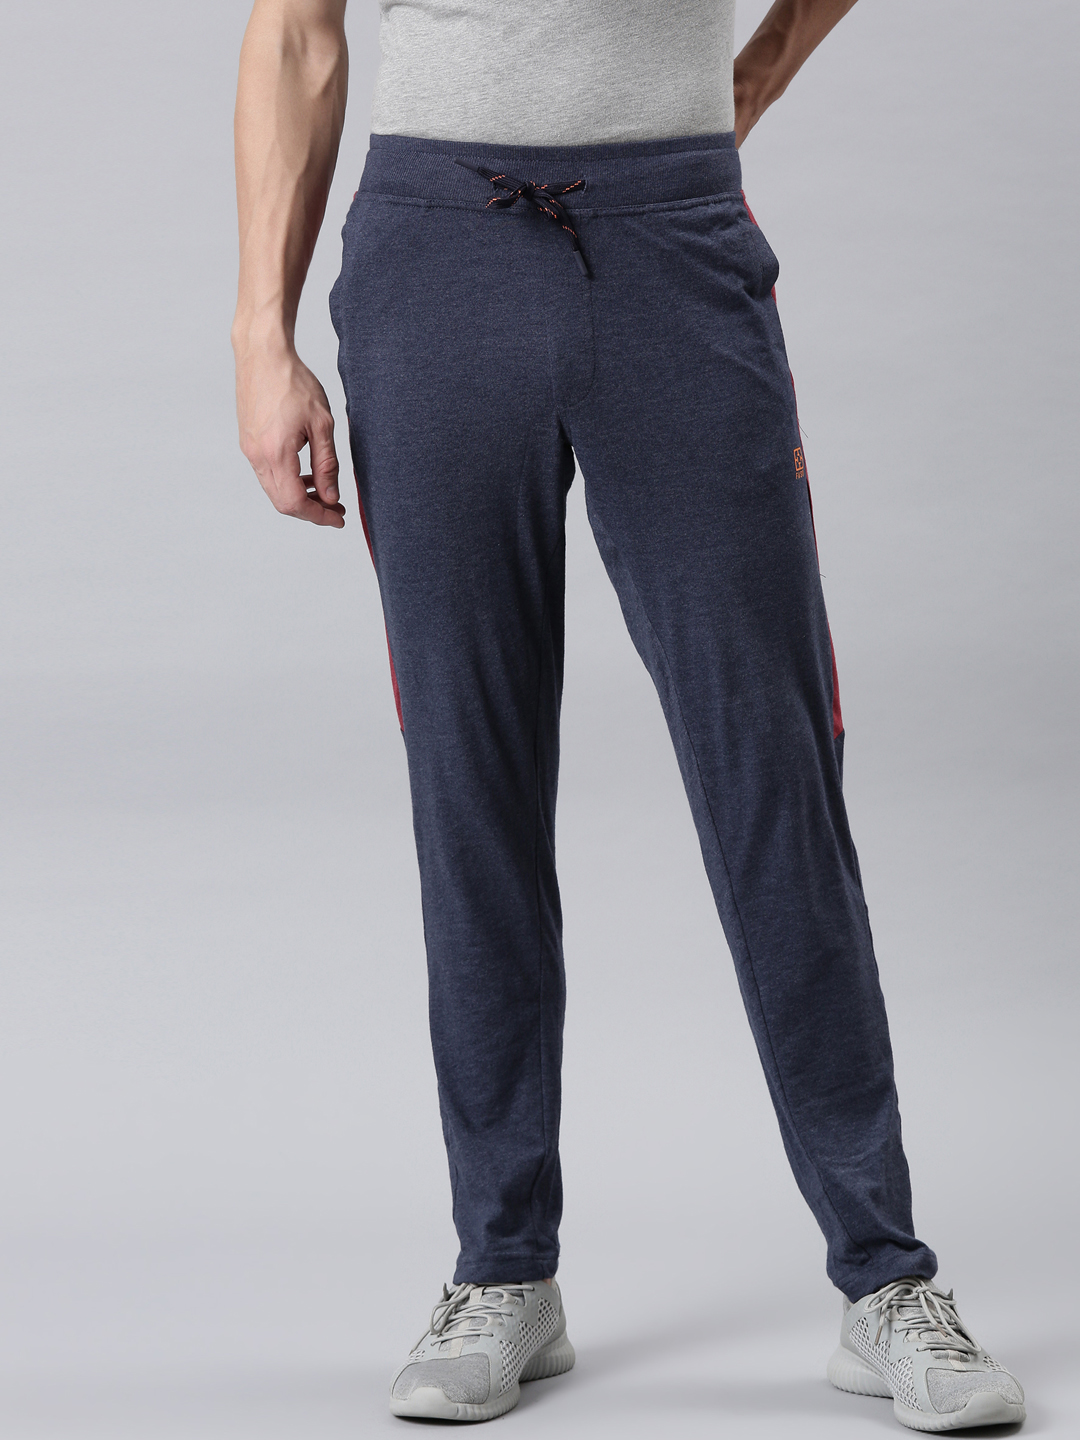 Buy Light Grey Track Pants for Men by Bushirt Online | Ajio.com